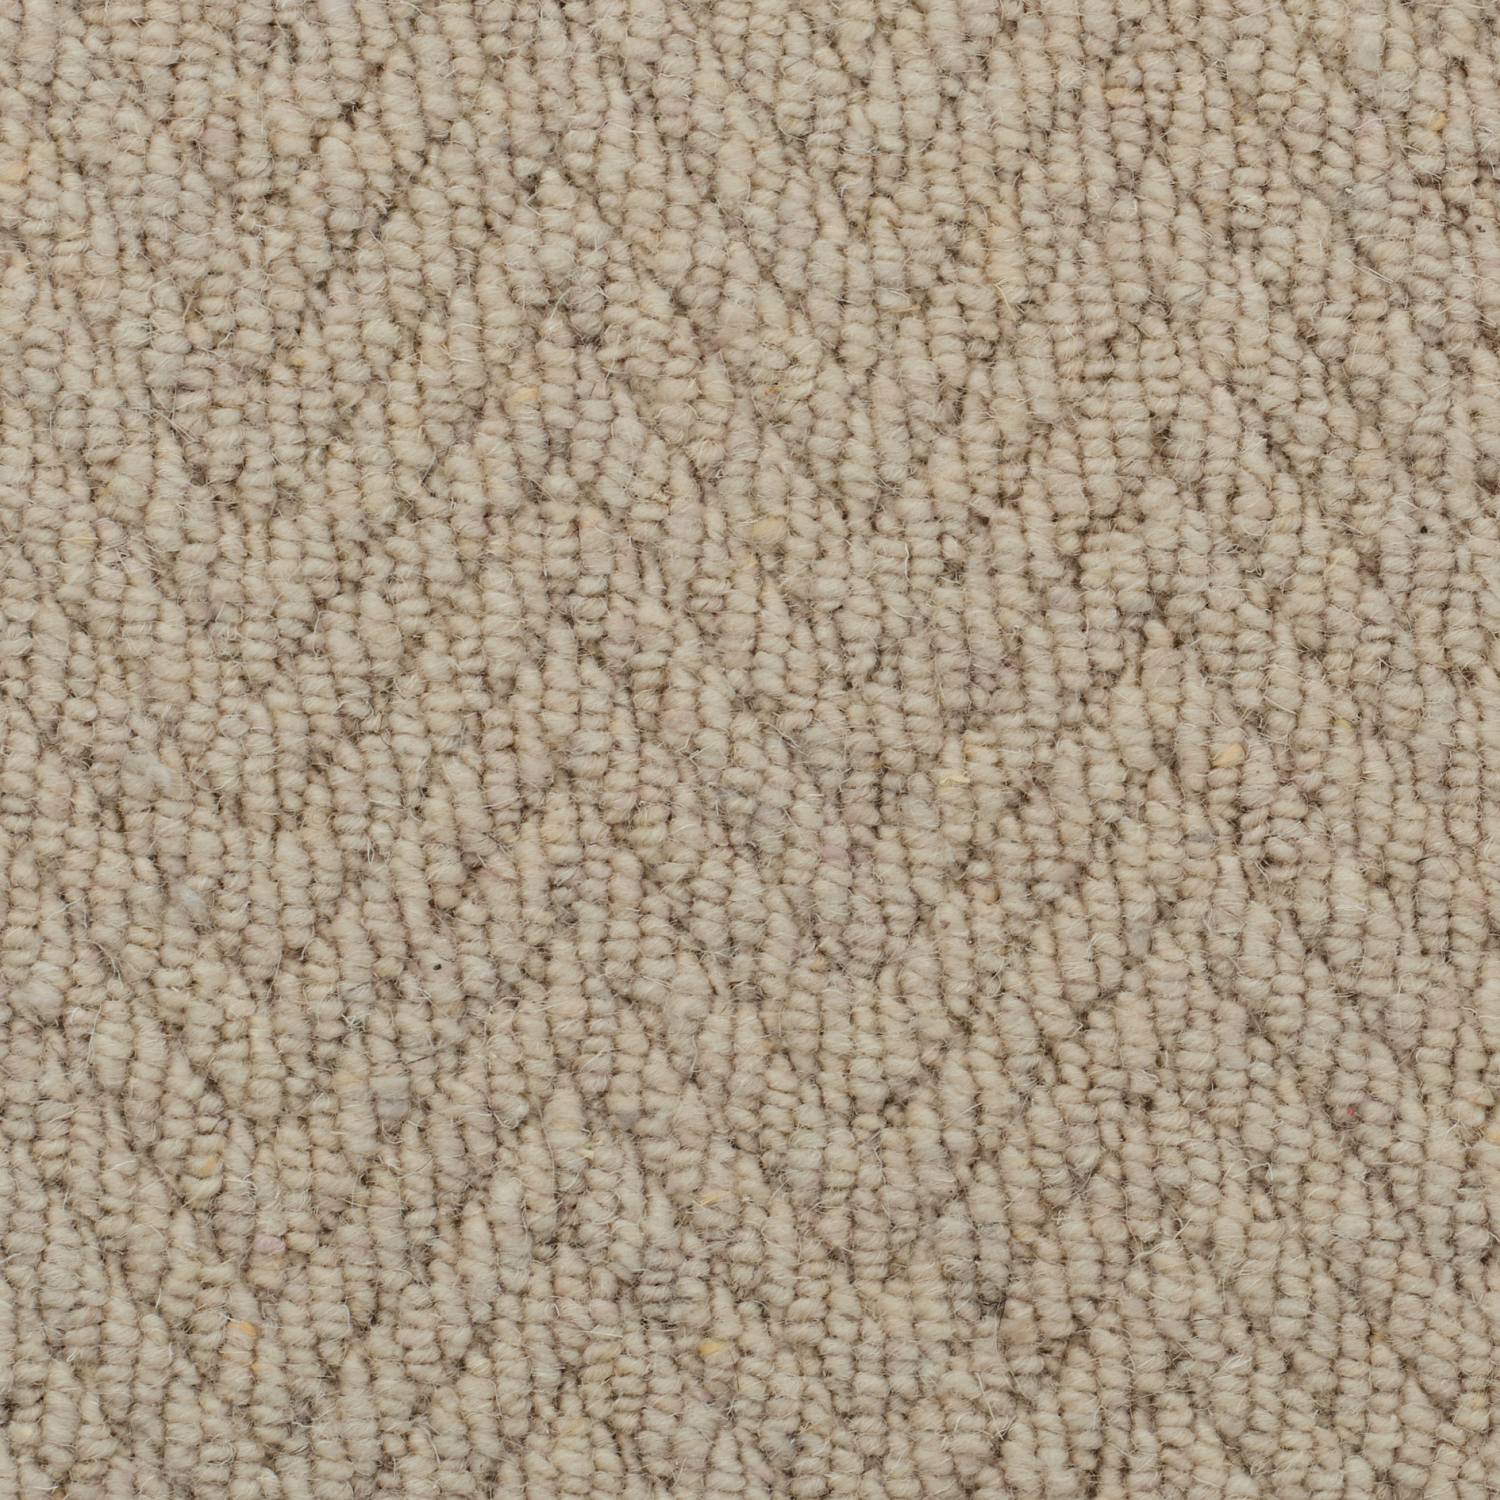 Natural Origins Loop Wool Carpet - Ecru Herringbone